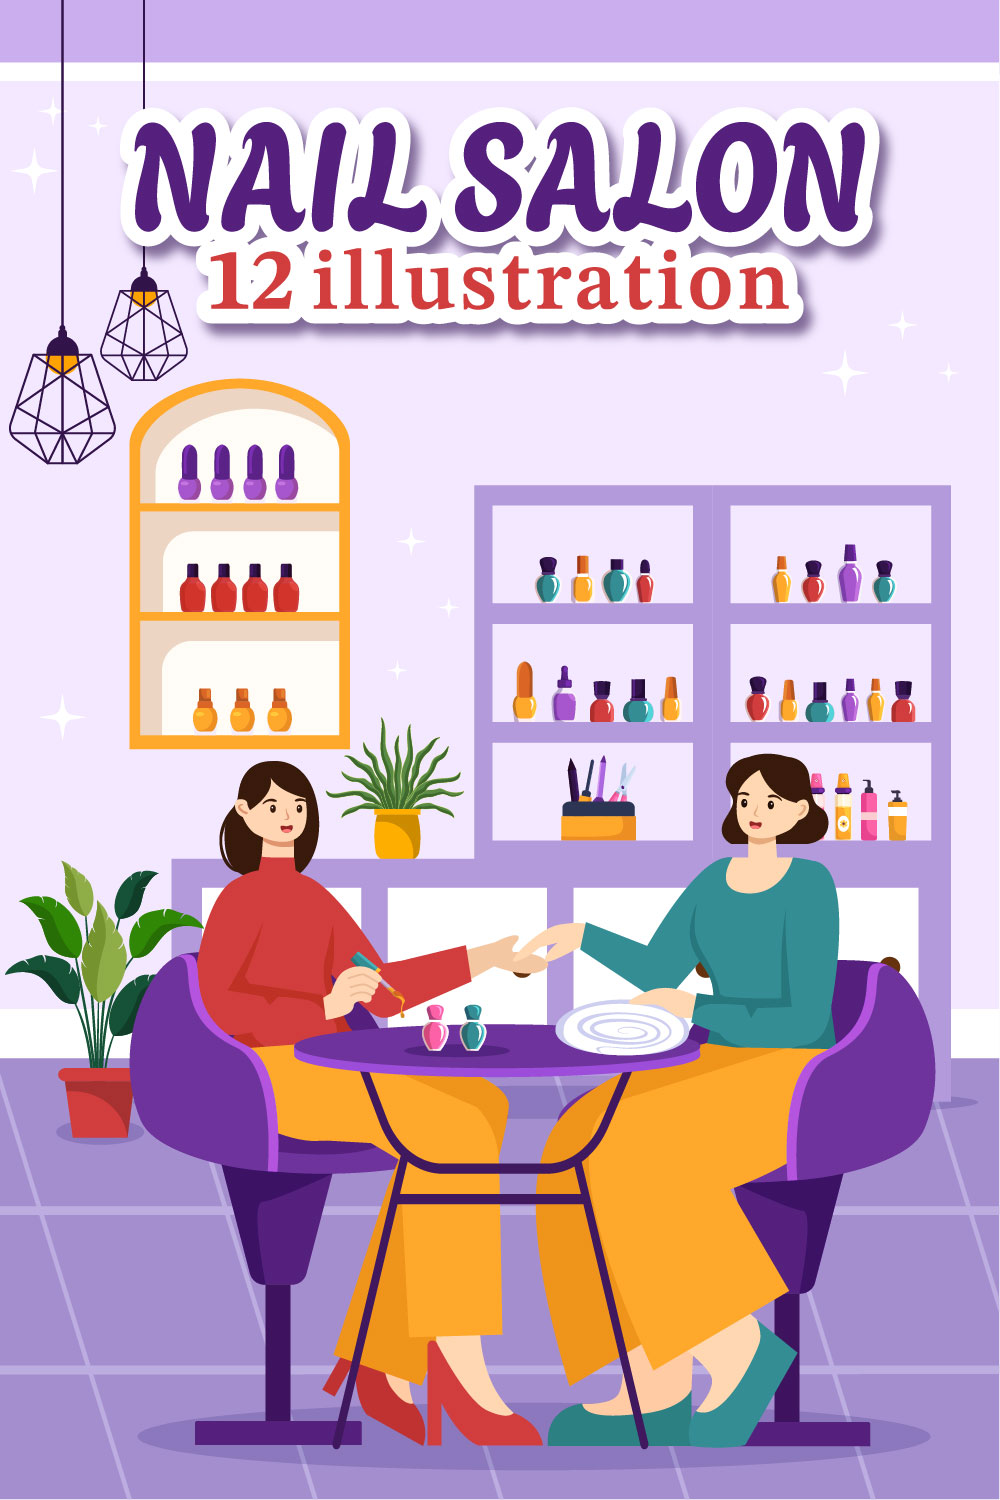 12 Nail Polish Salon Illustration pinterest preview image.